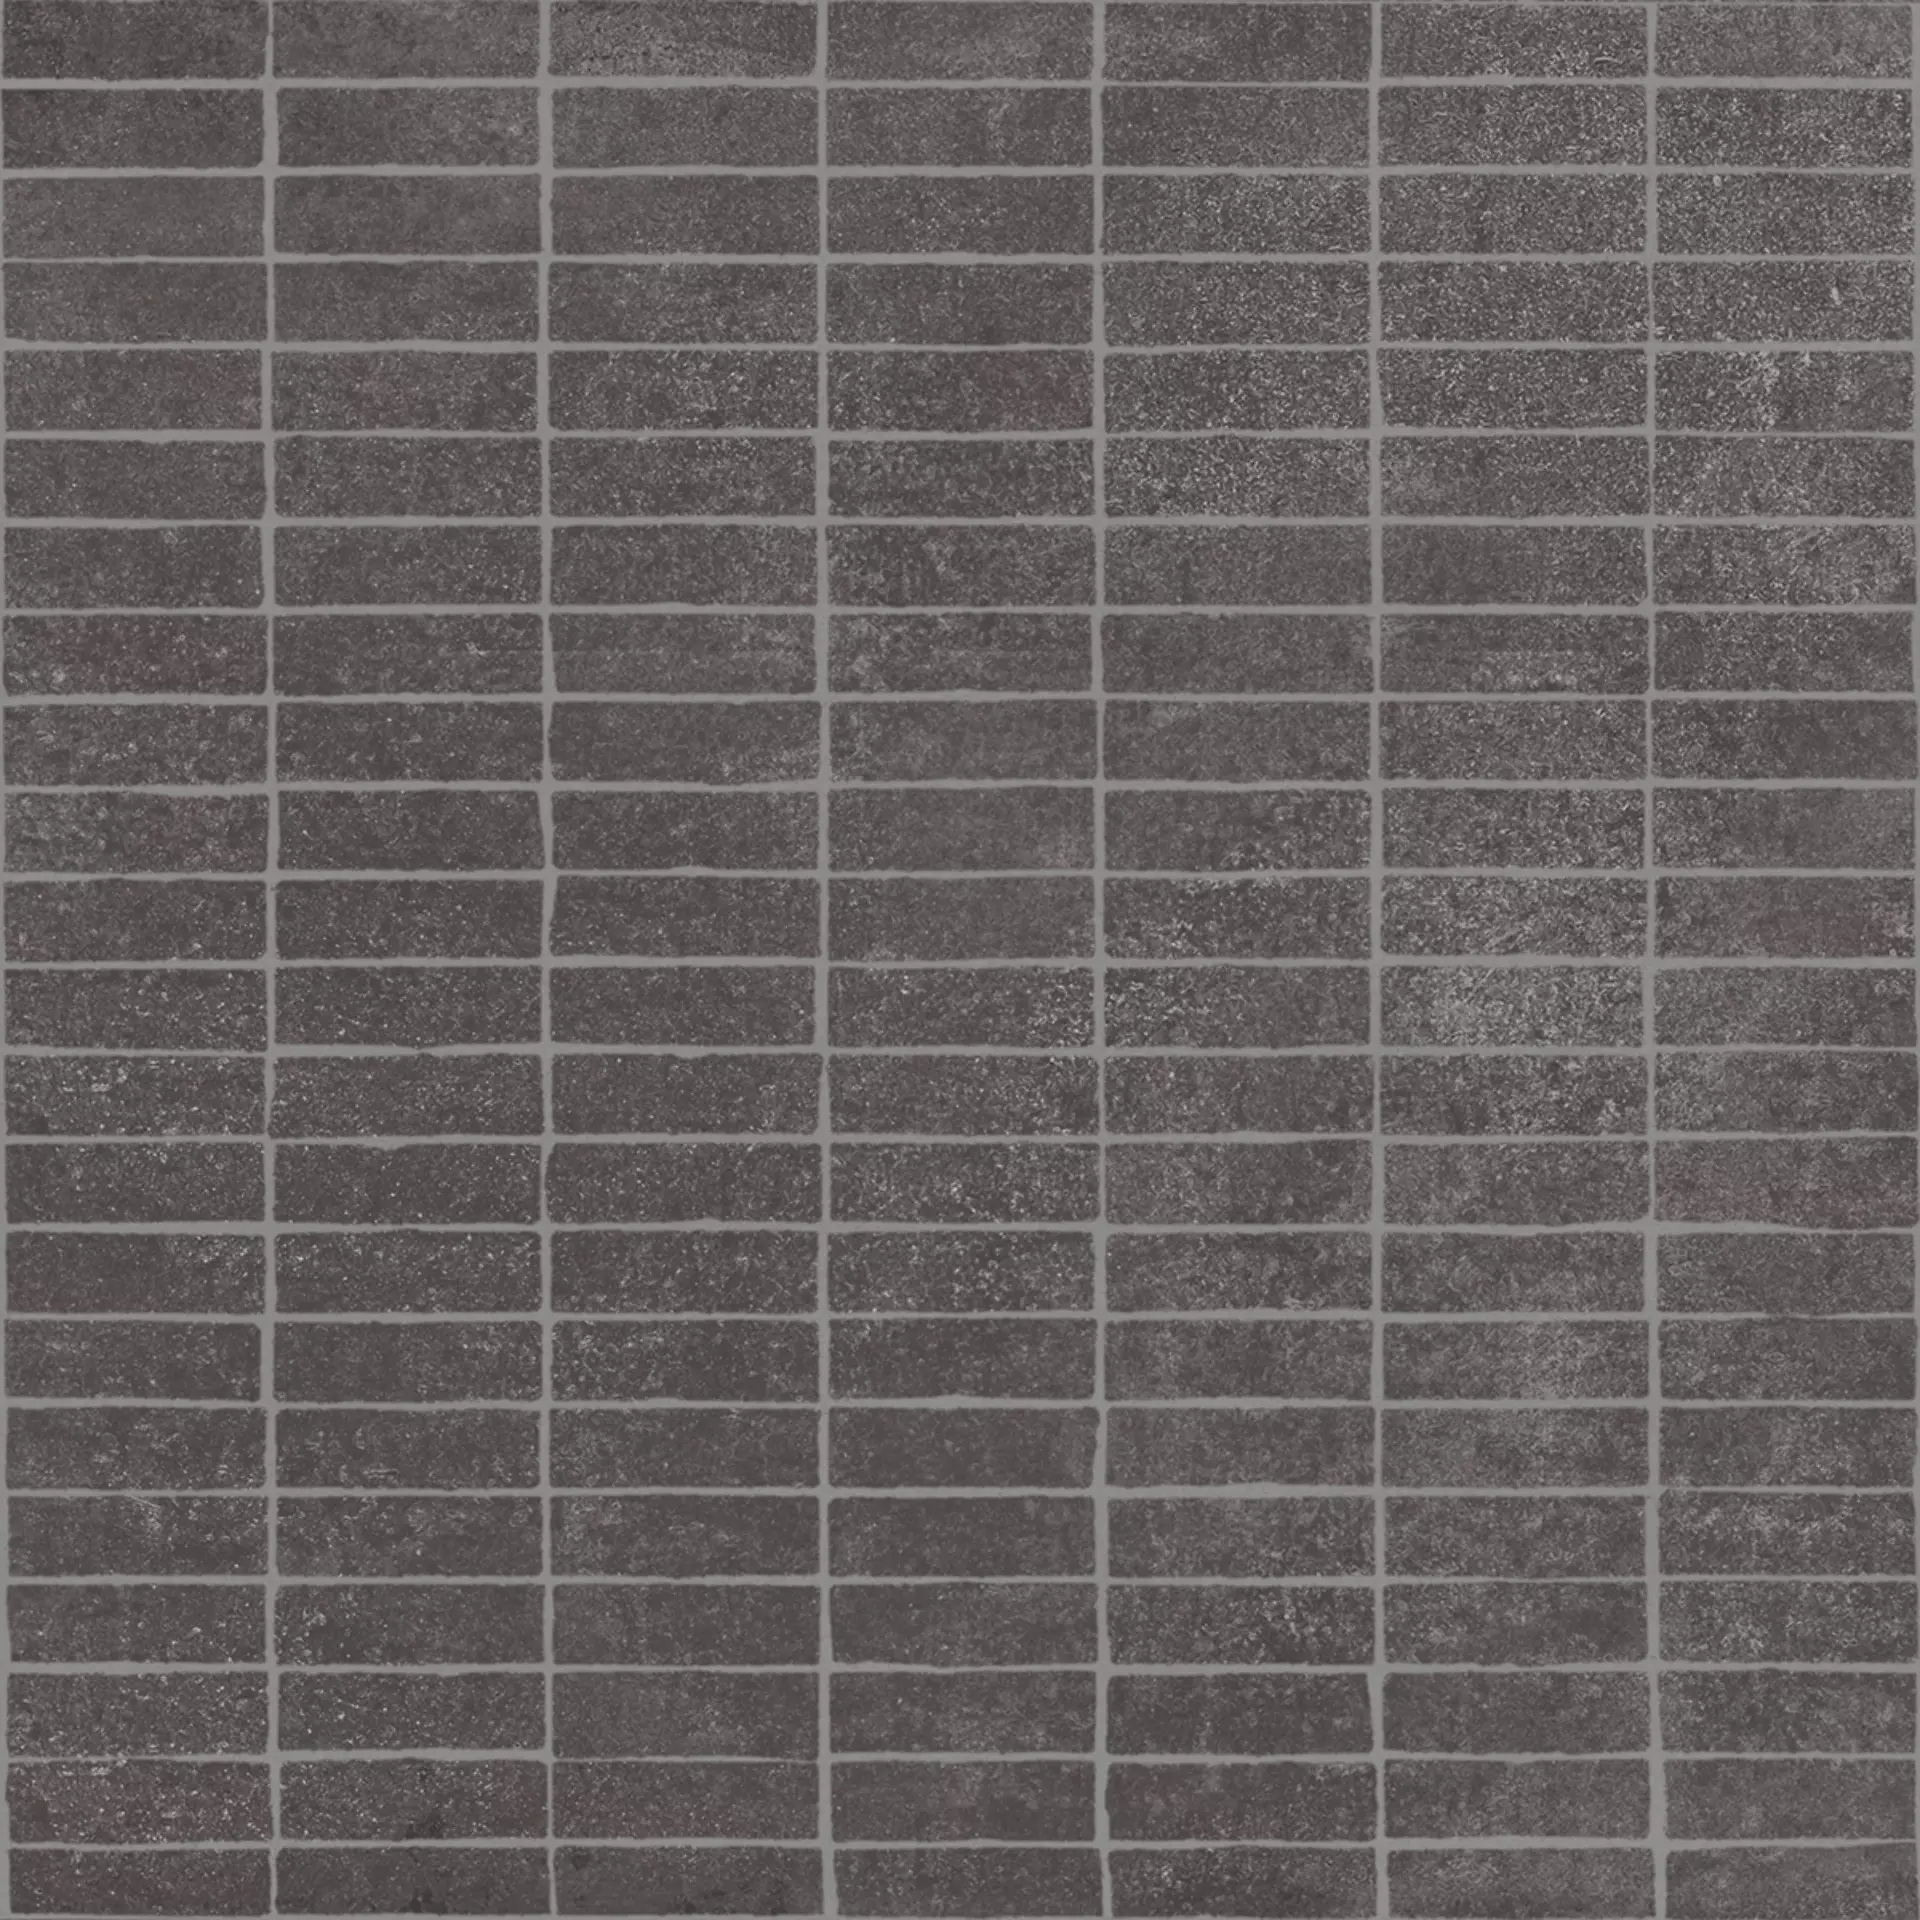 Wandfliese Marazzi Fresco Shadow Naturale – Matt Shadow MPCU matt natur 32,5x32,5cm Mosaik 6mm